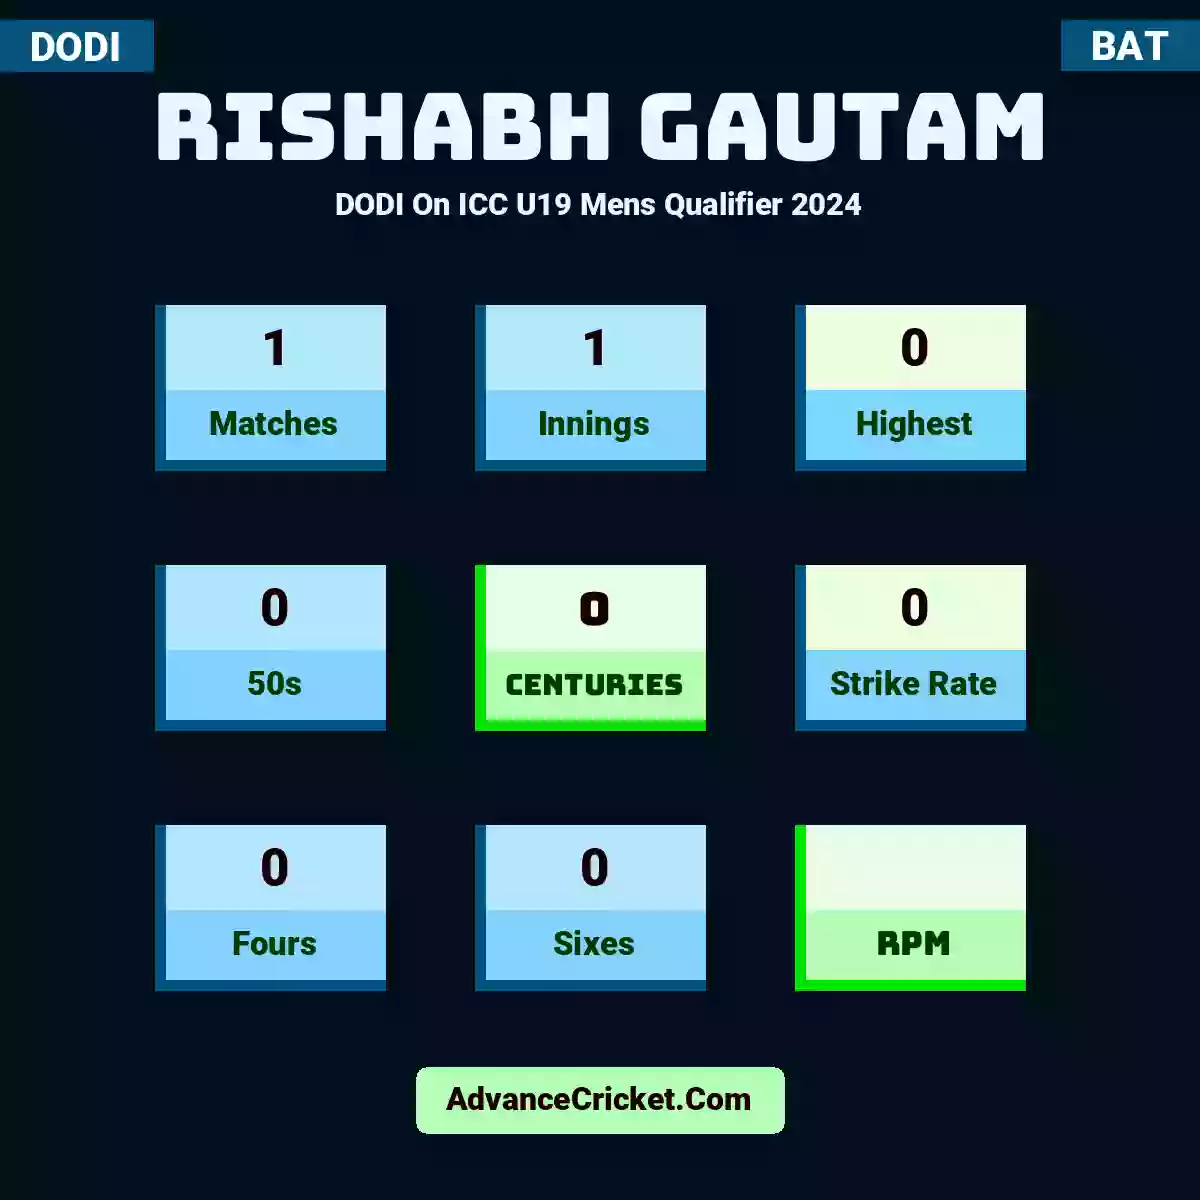 Rishabh Gautam DODI  On ICC U19 Mens Qualifier 2024, Rishabh Gautam played 1 matches, scored 0 runs as highest, 0 half-centuries, and 0 centuries, with a strike rate of 0. R.Gautam hit 0 fours and 0 sixes.